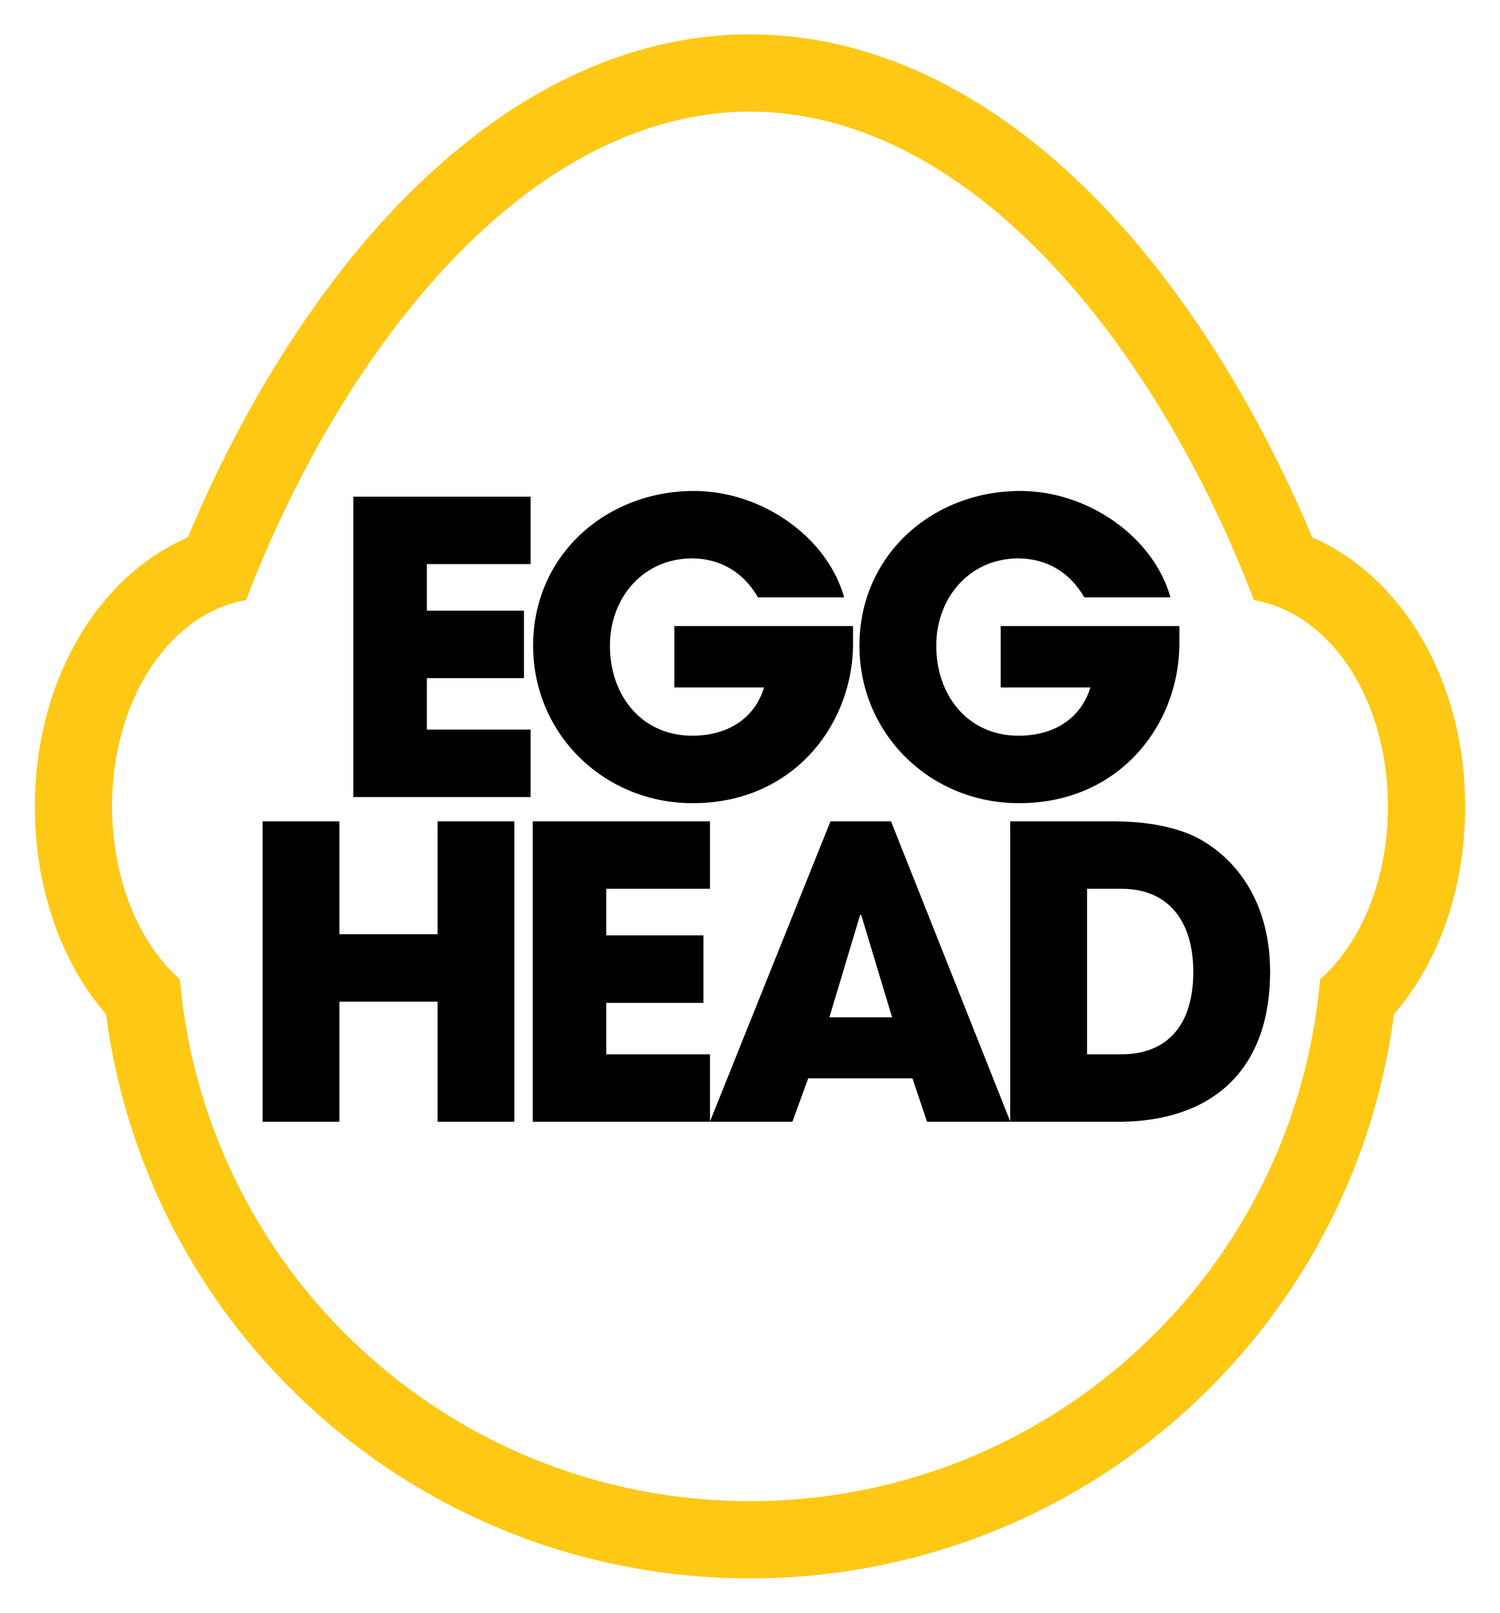 egghead creative